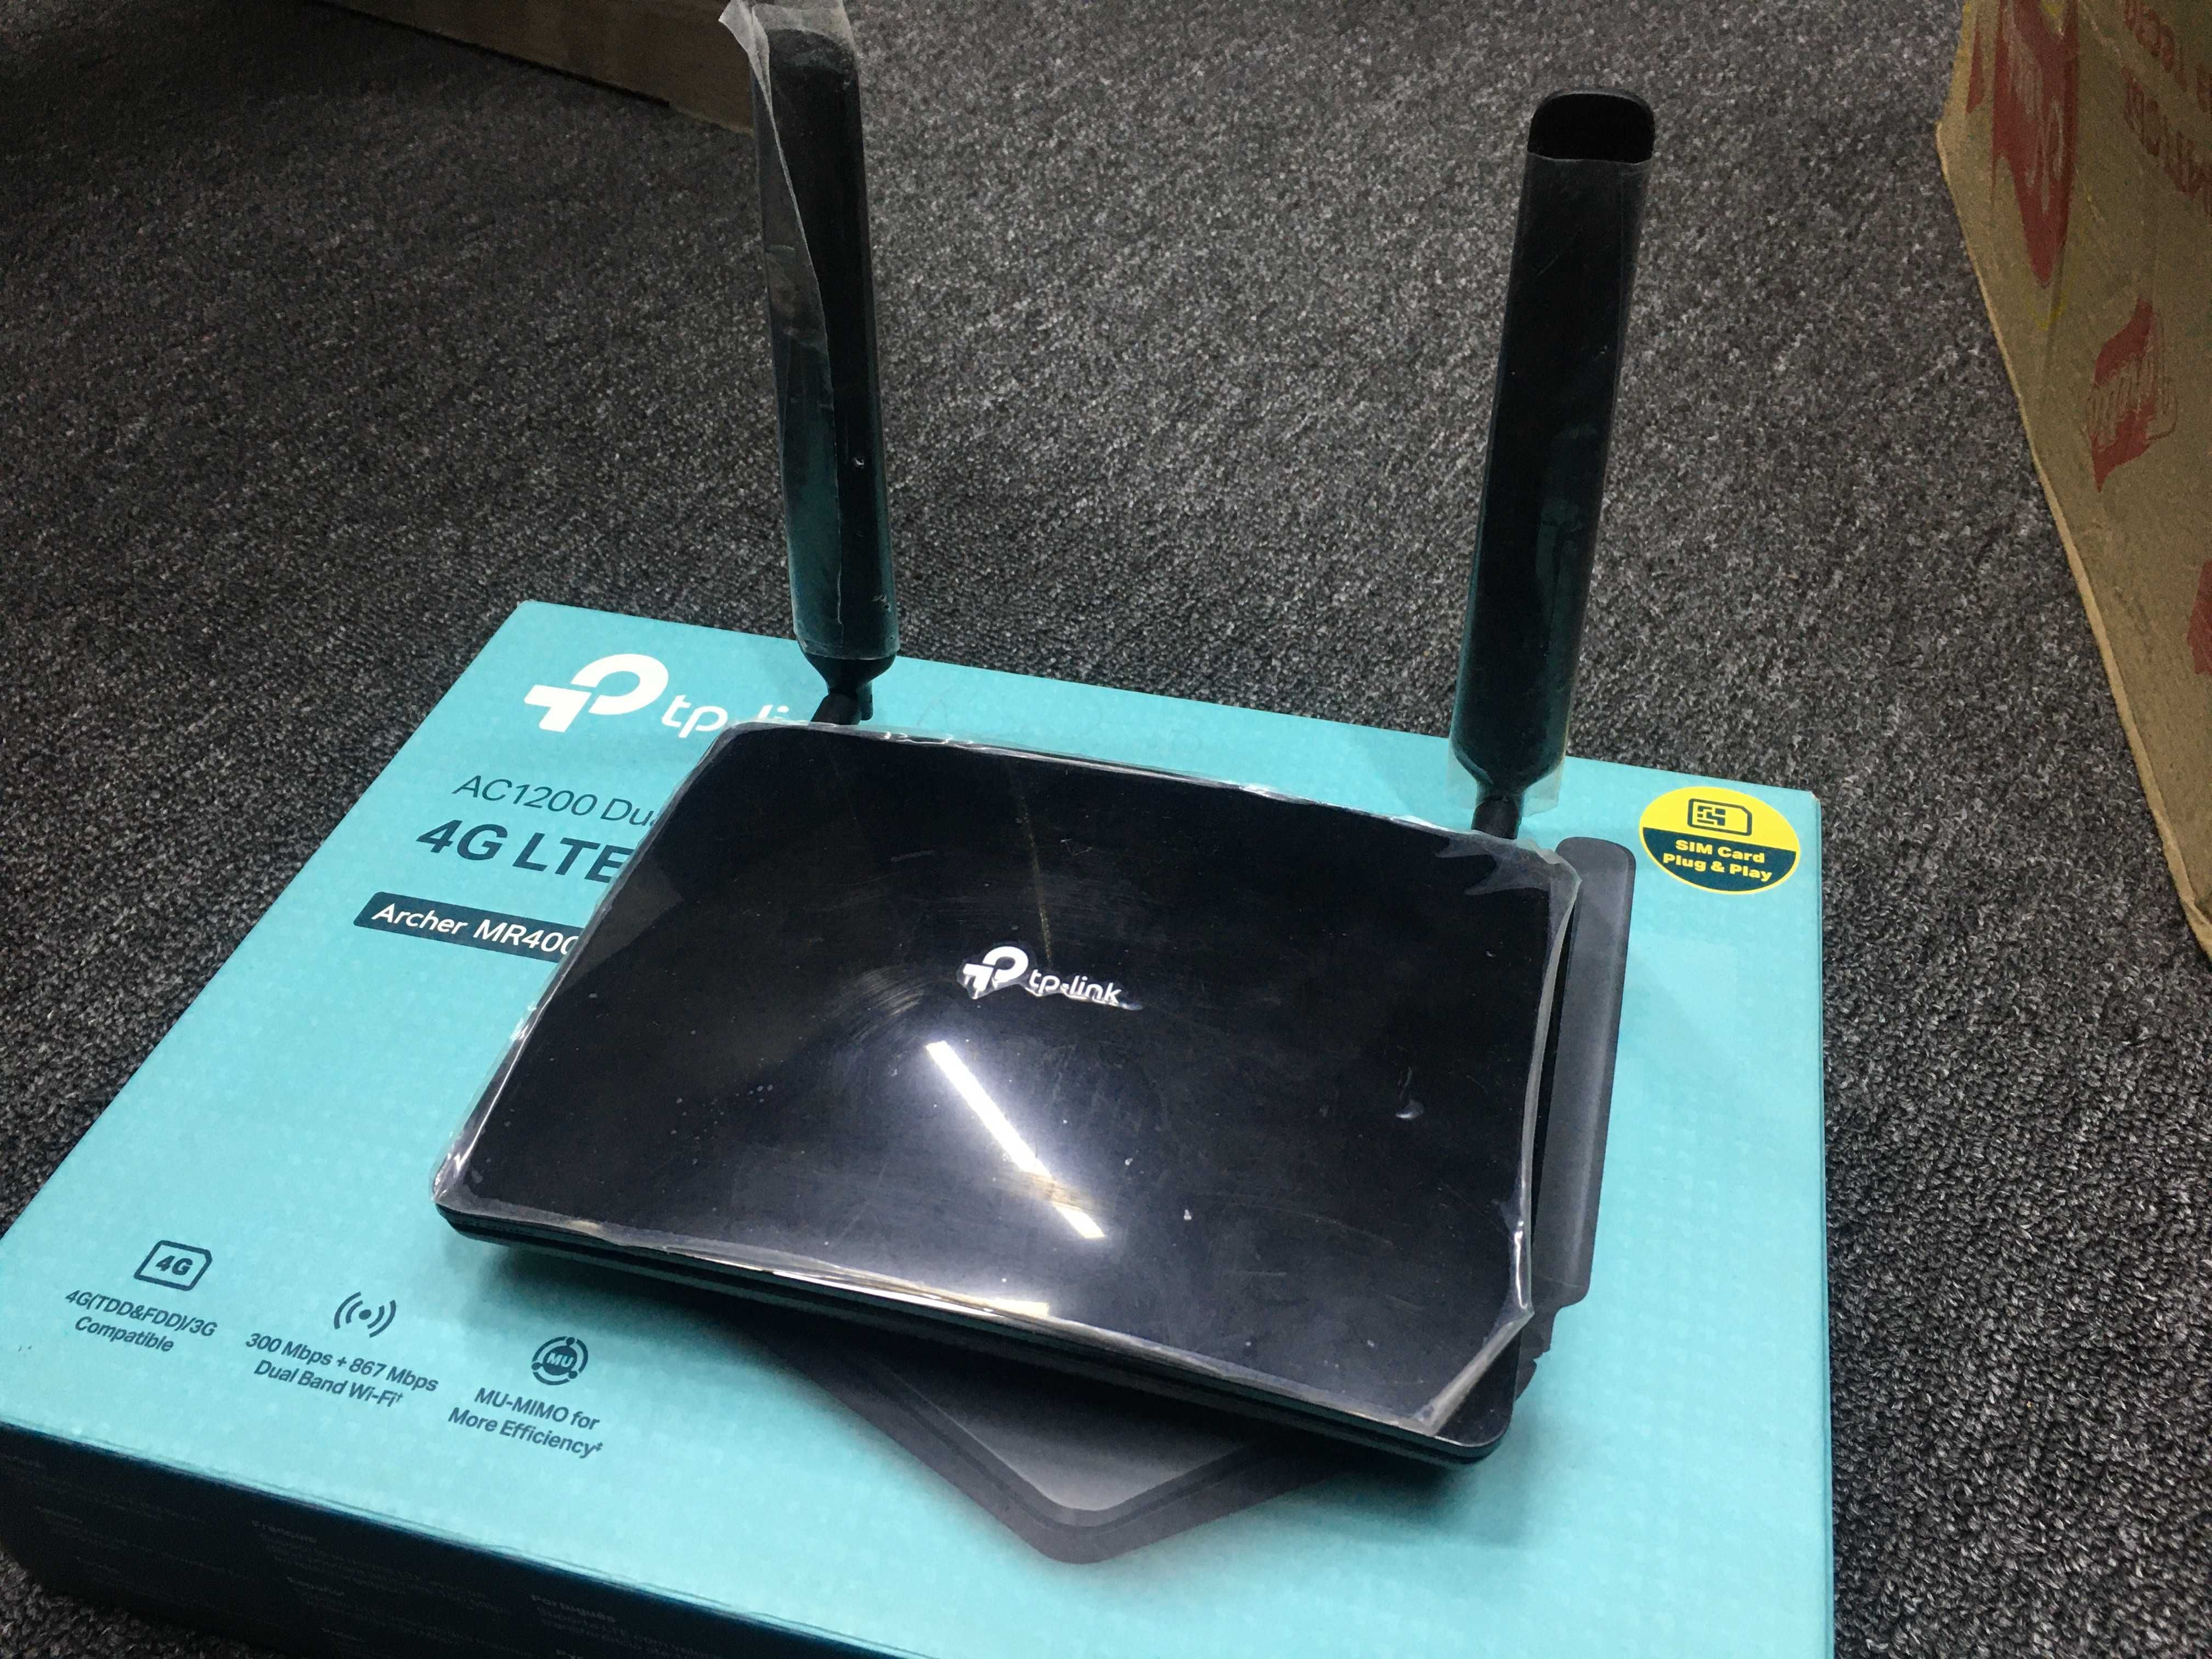 Wi-fi router Tp-link Archer MR400